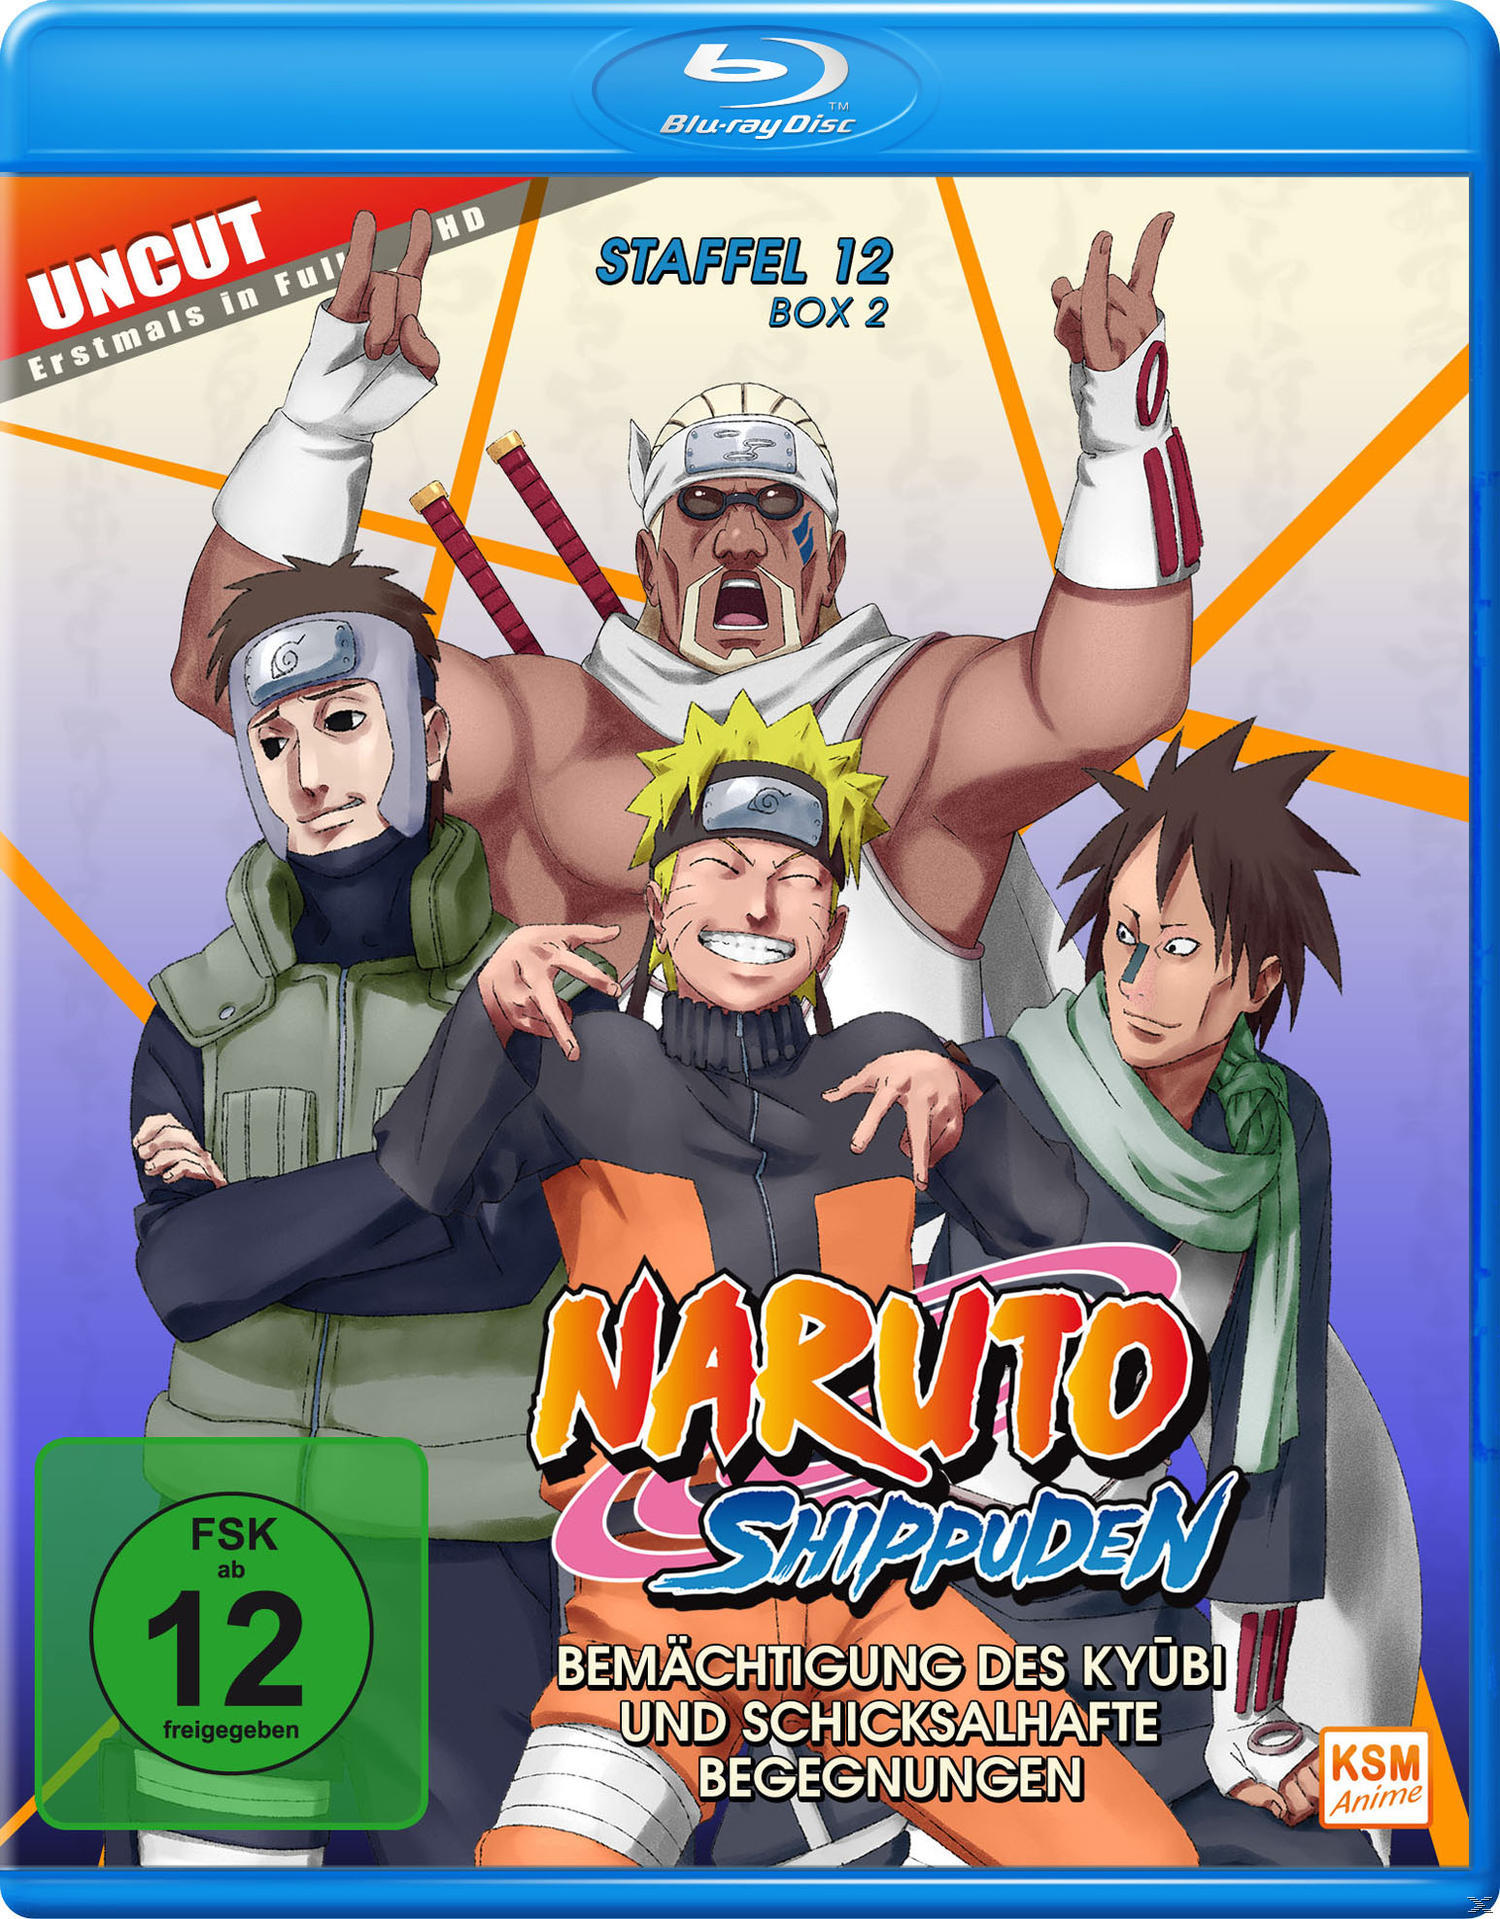 Naruto Shippuden - 2 12 Blu-ray Staffel Box 